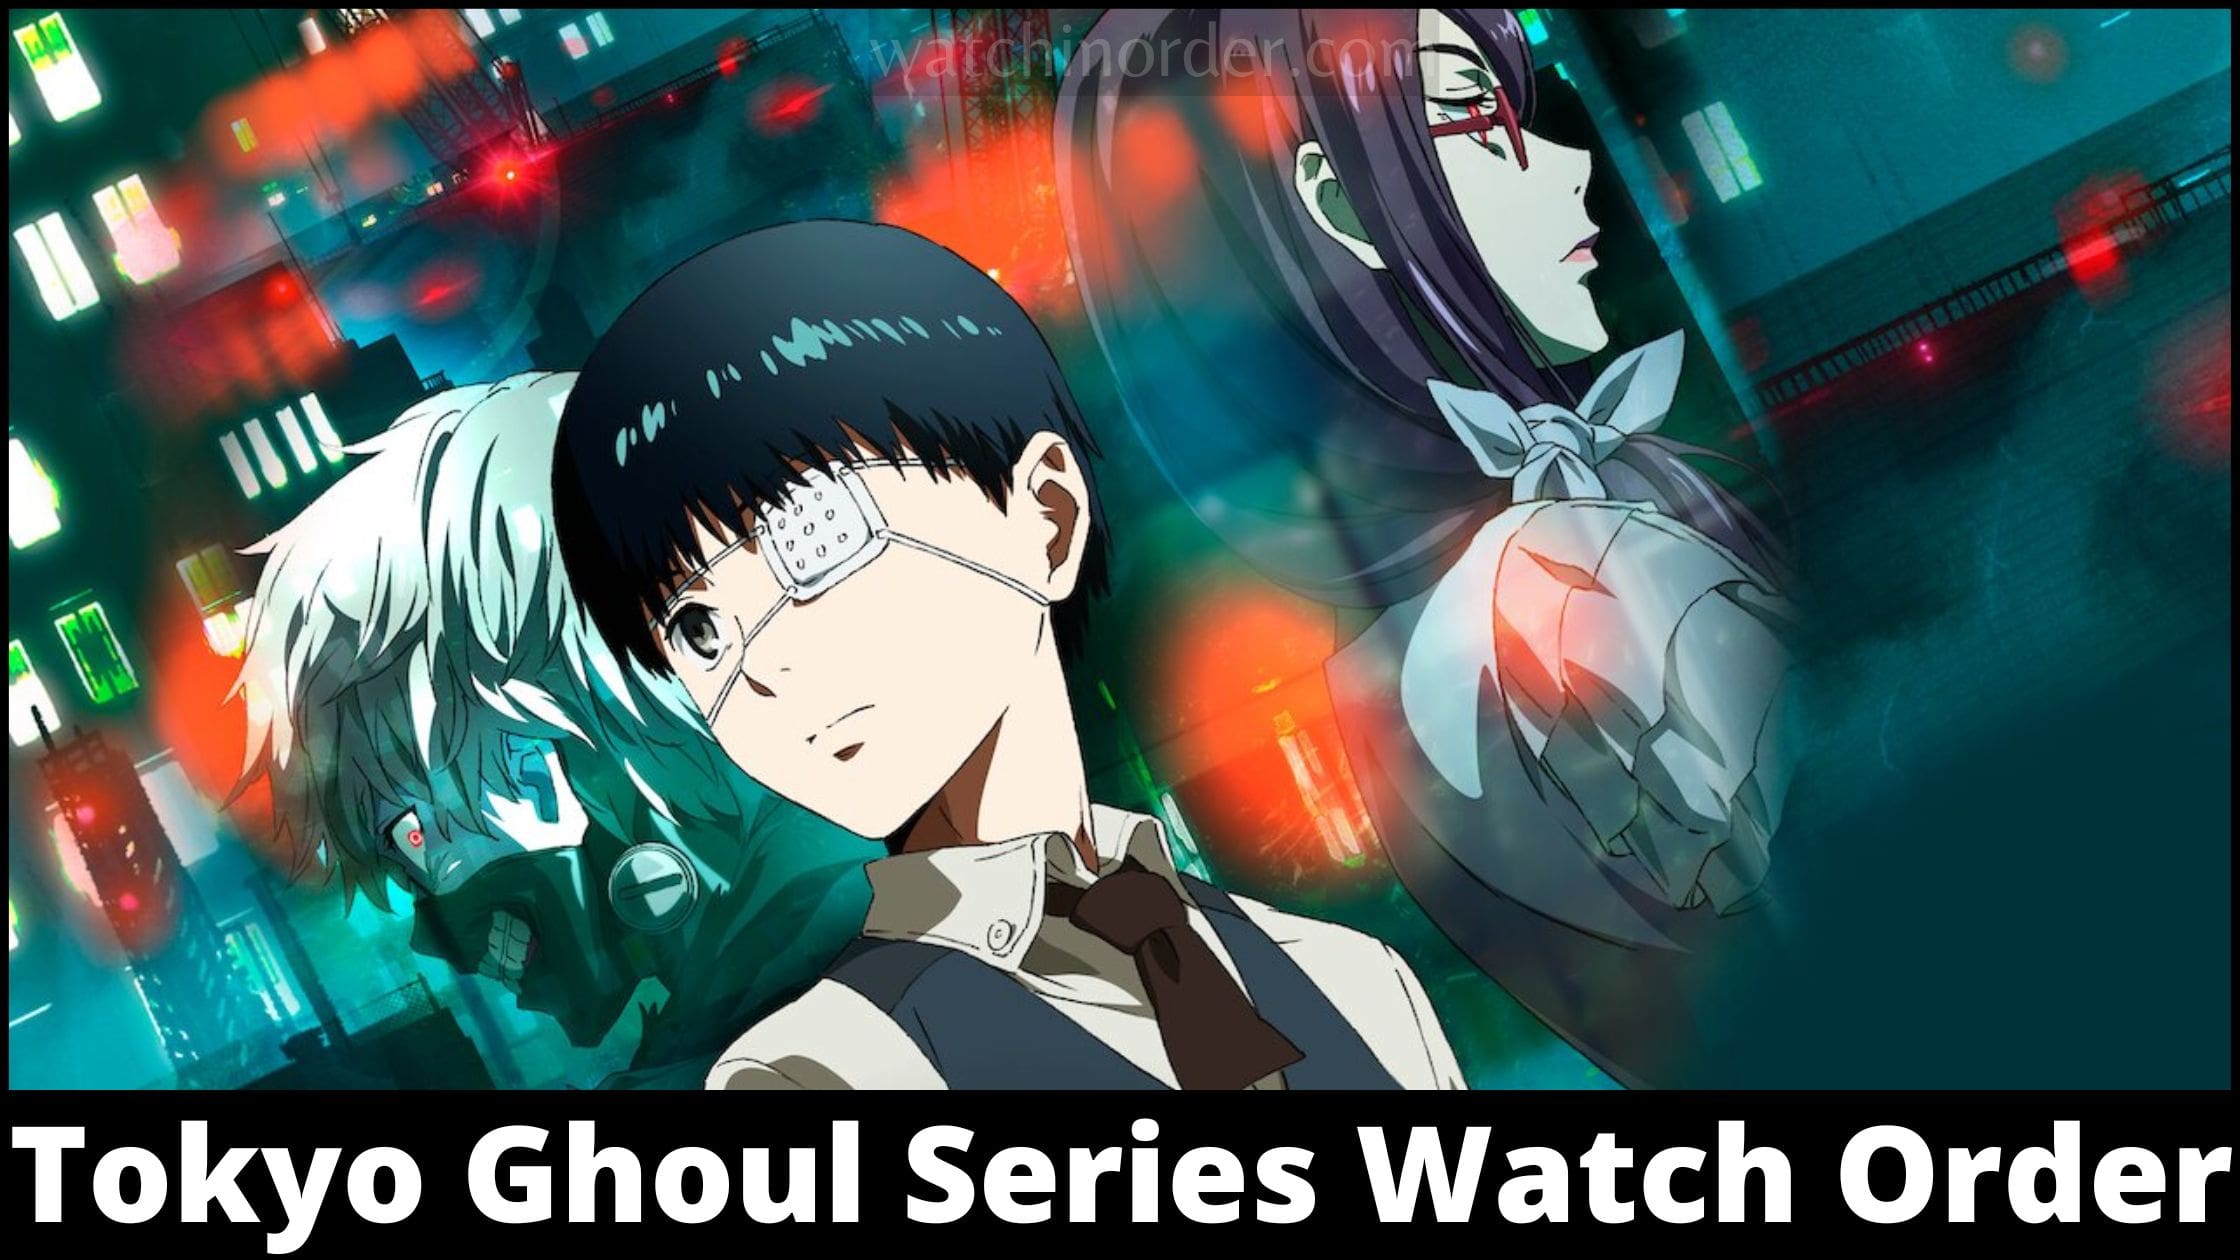 Tokyo Ghoul Series Watch Order Poster